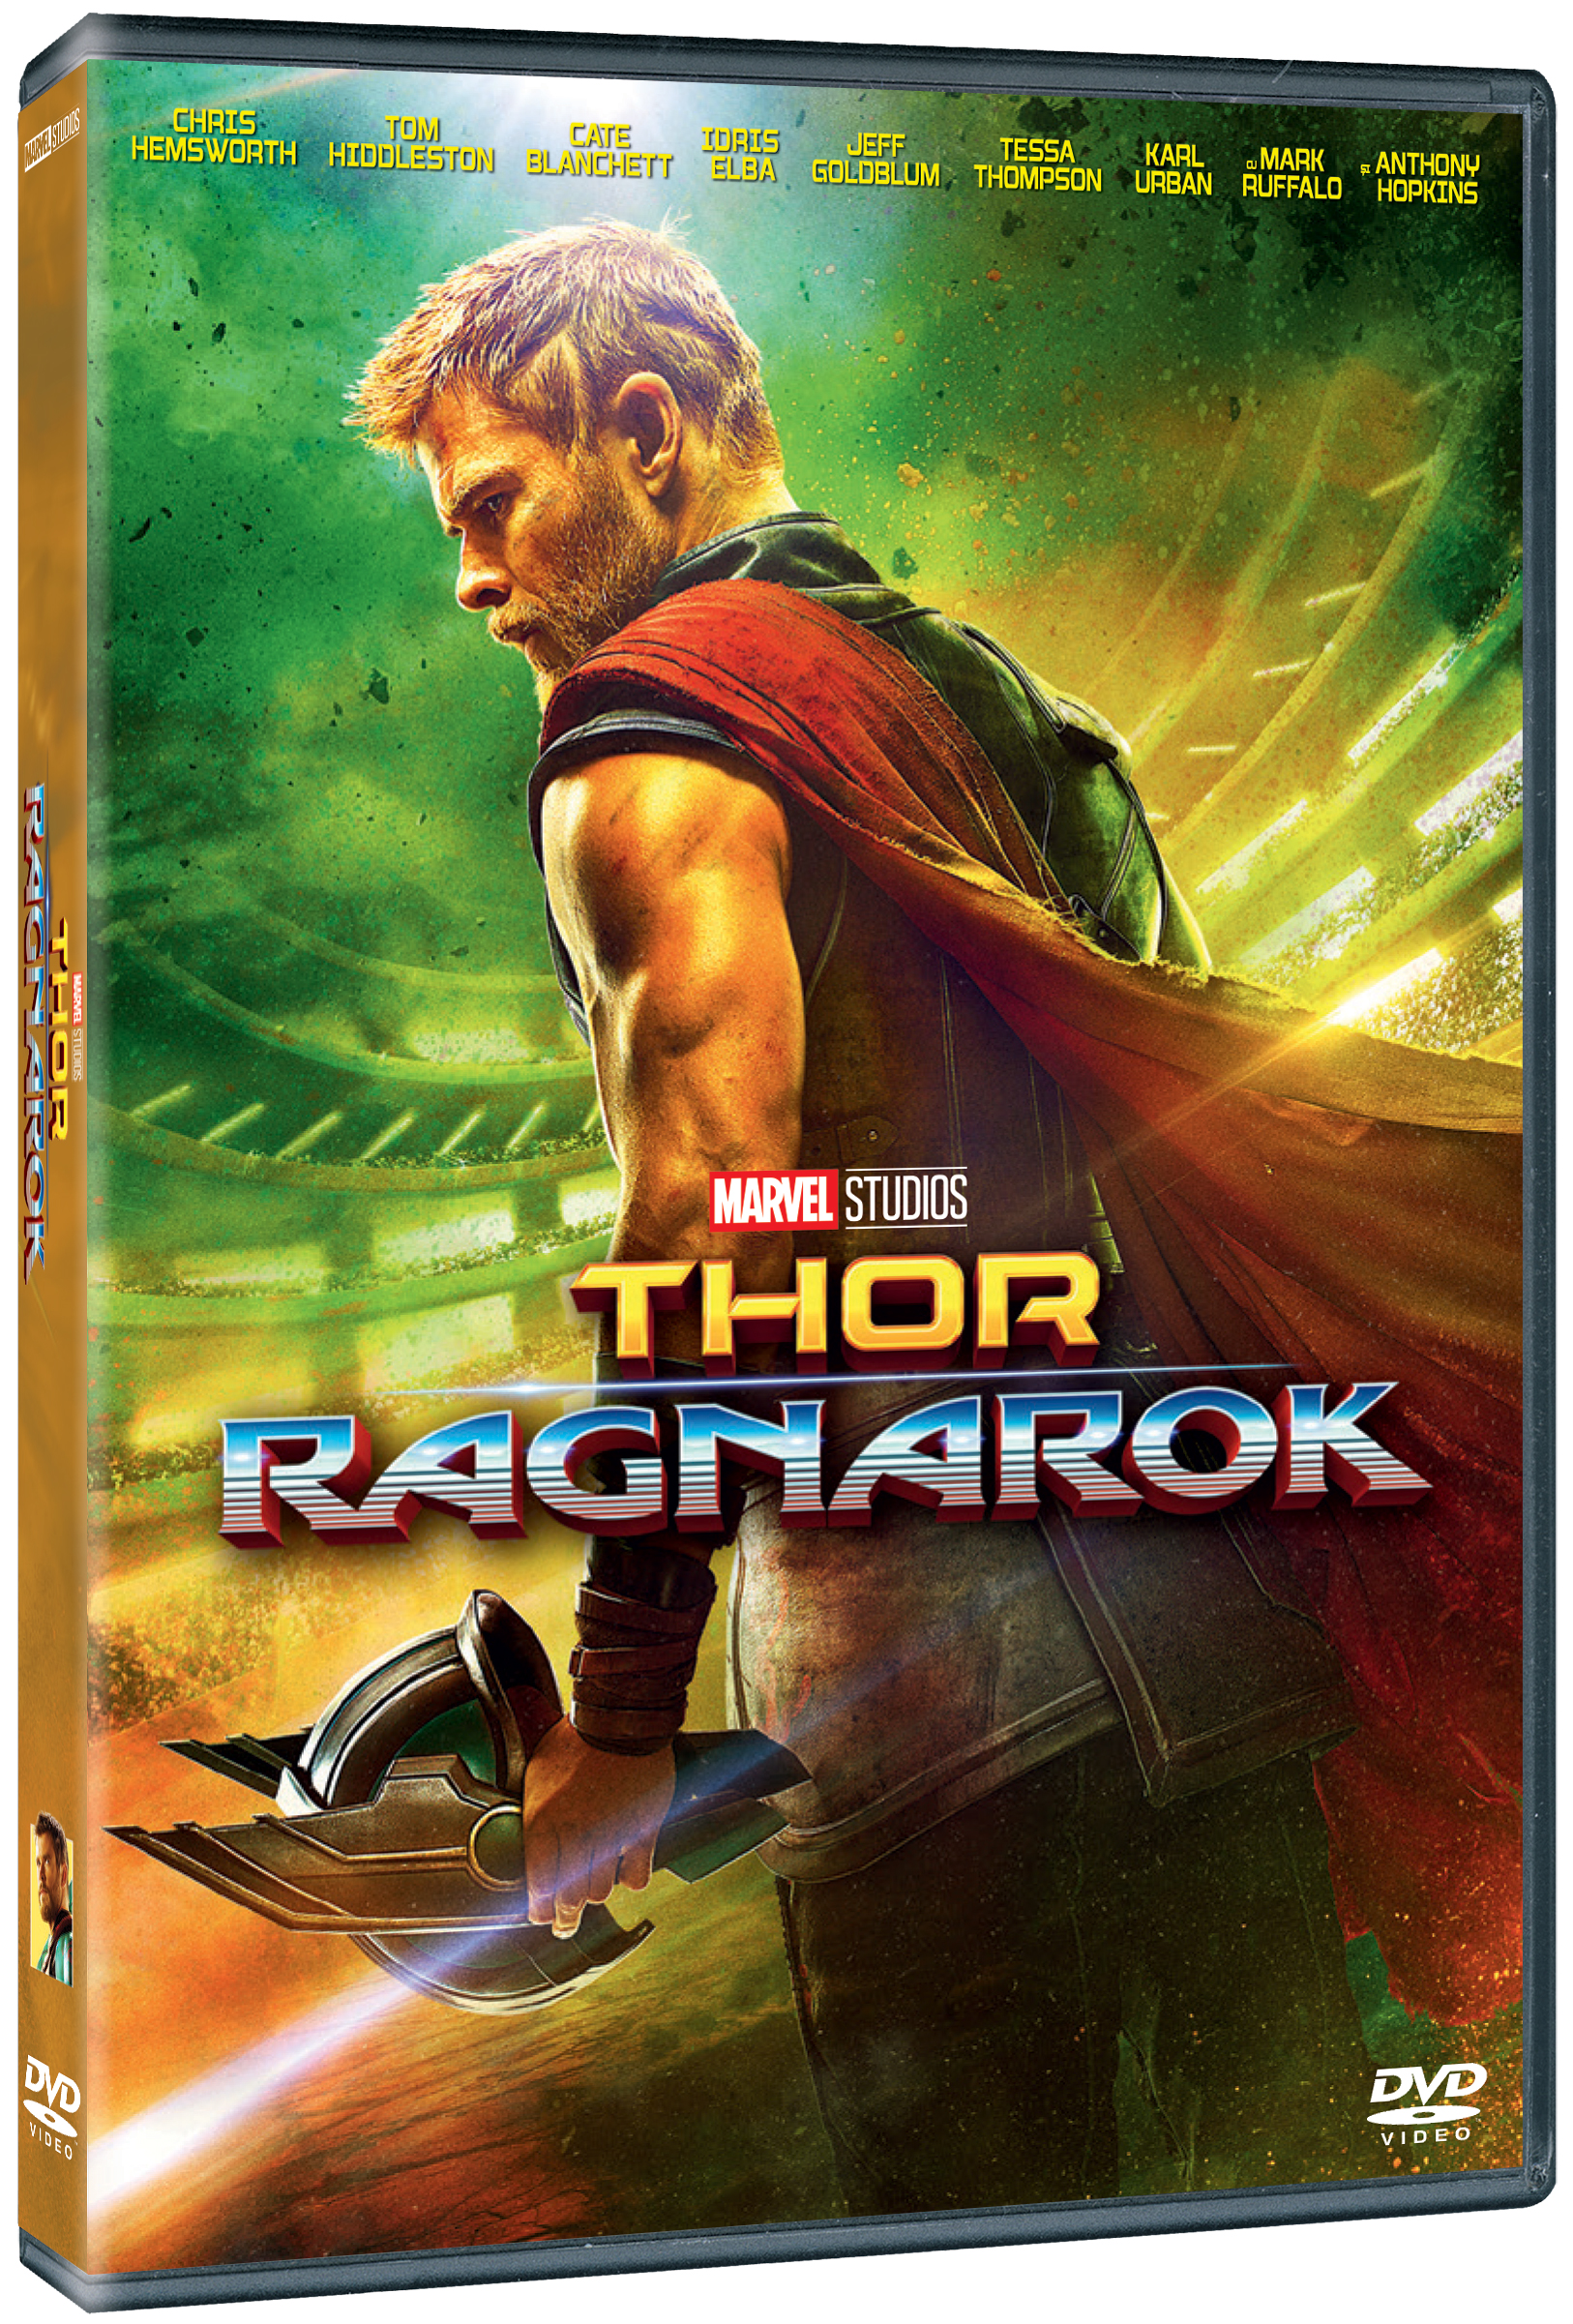 instal the last version for windows Thor: Ragnarok